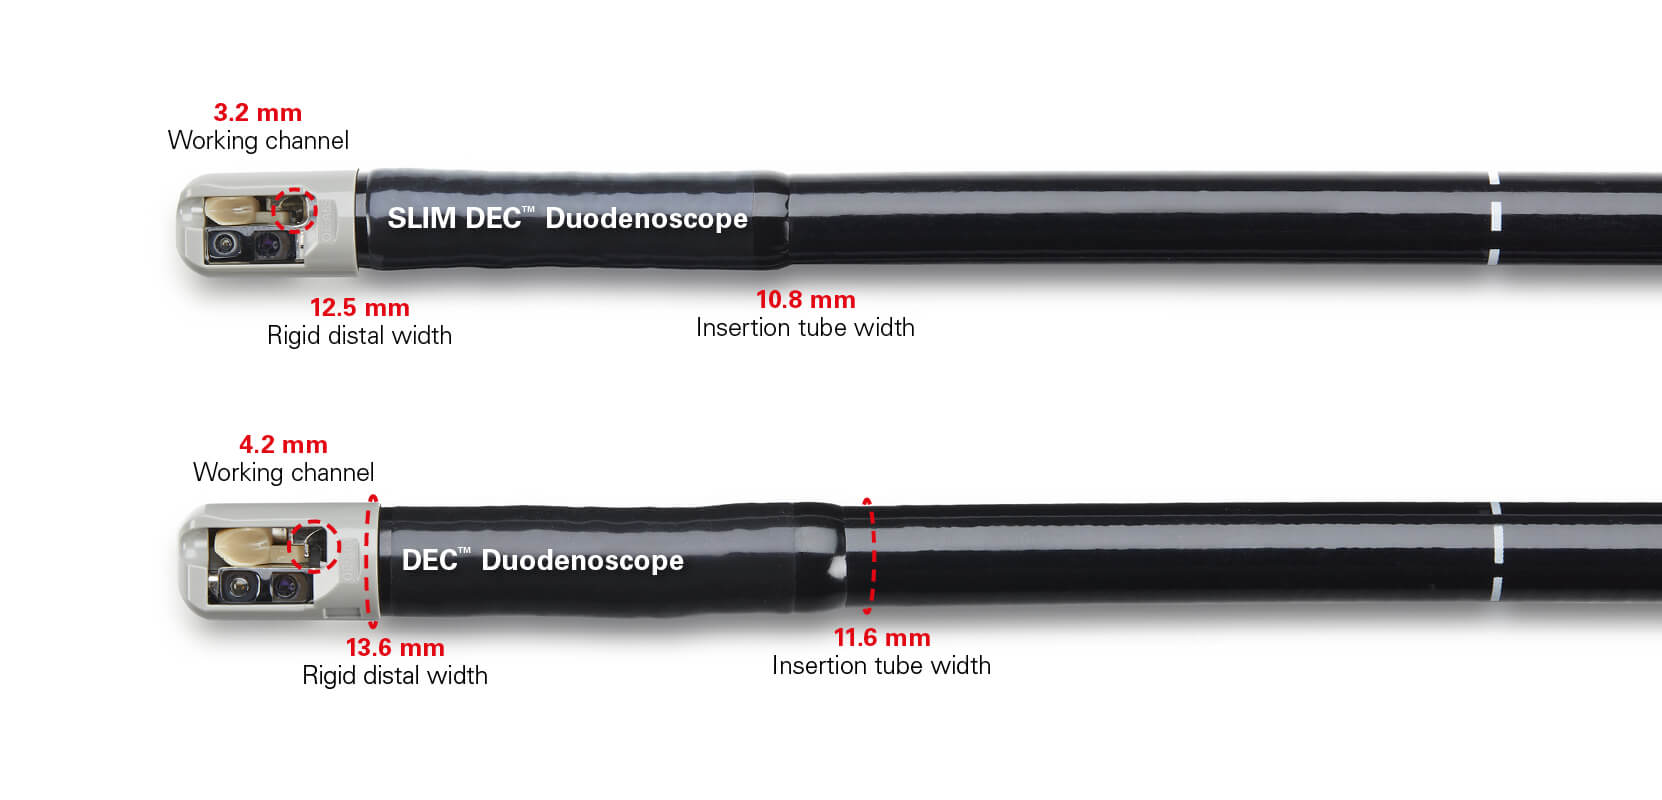 PENTAX Medical Slim DEC and DEC Duodenoscope dimensions comparison